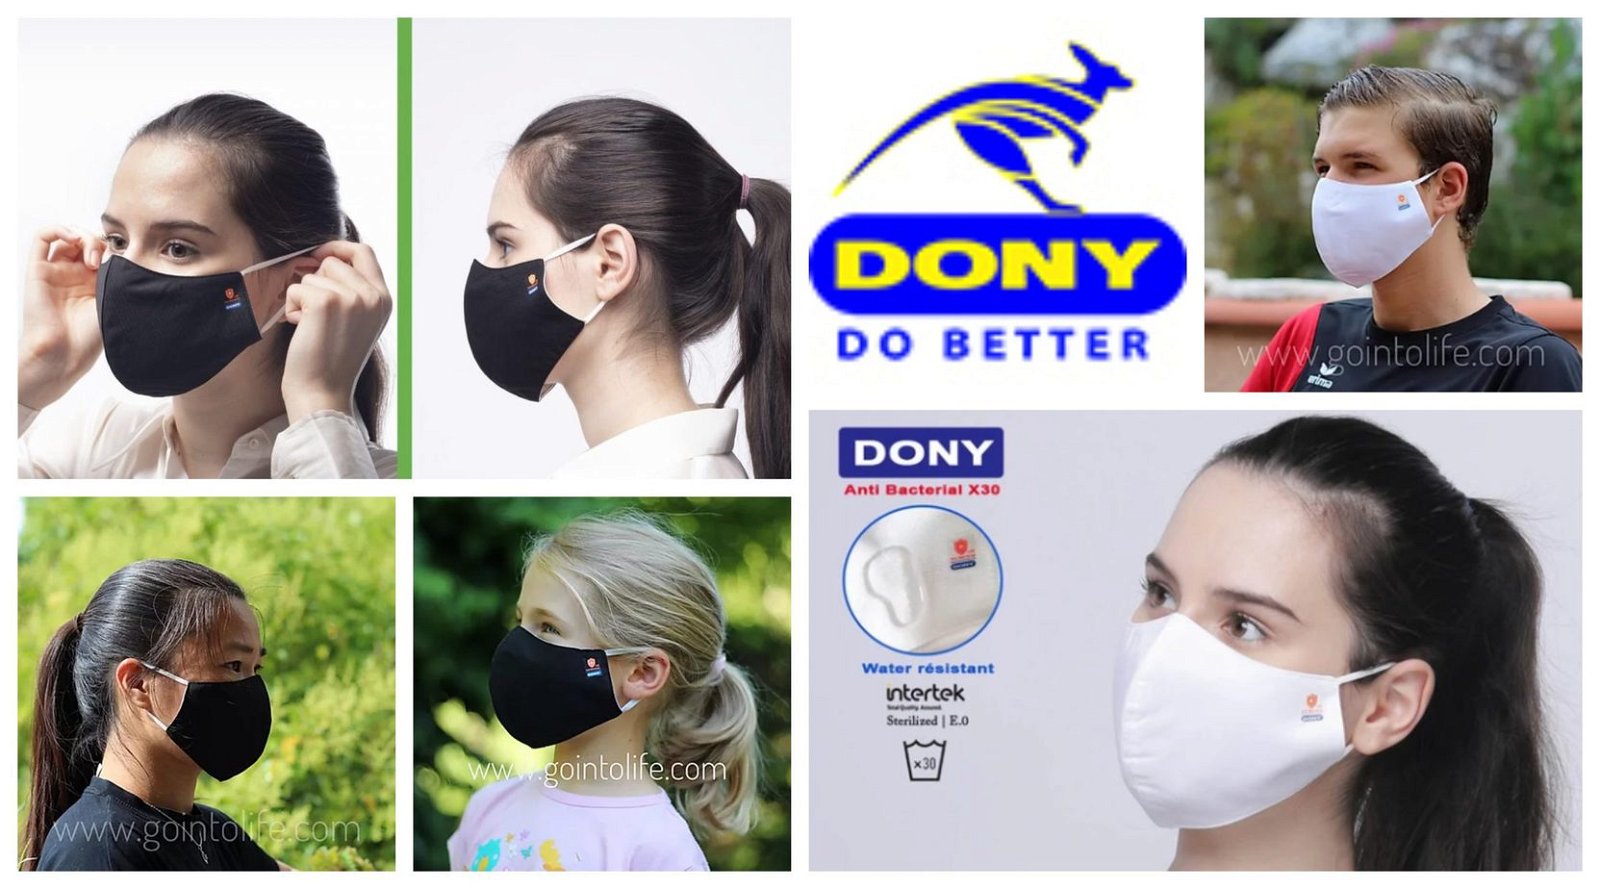 - DONY MASK - Premium Antibacterial Cloth Face Mask